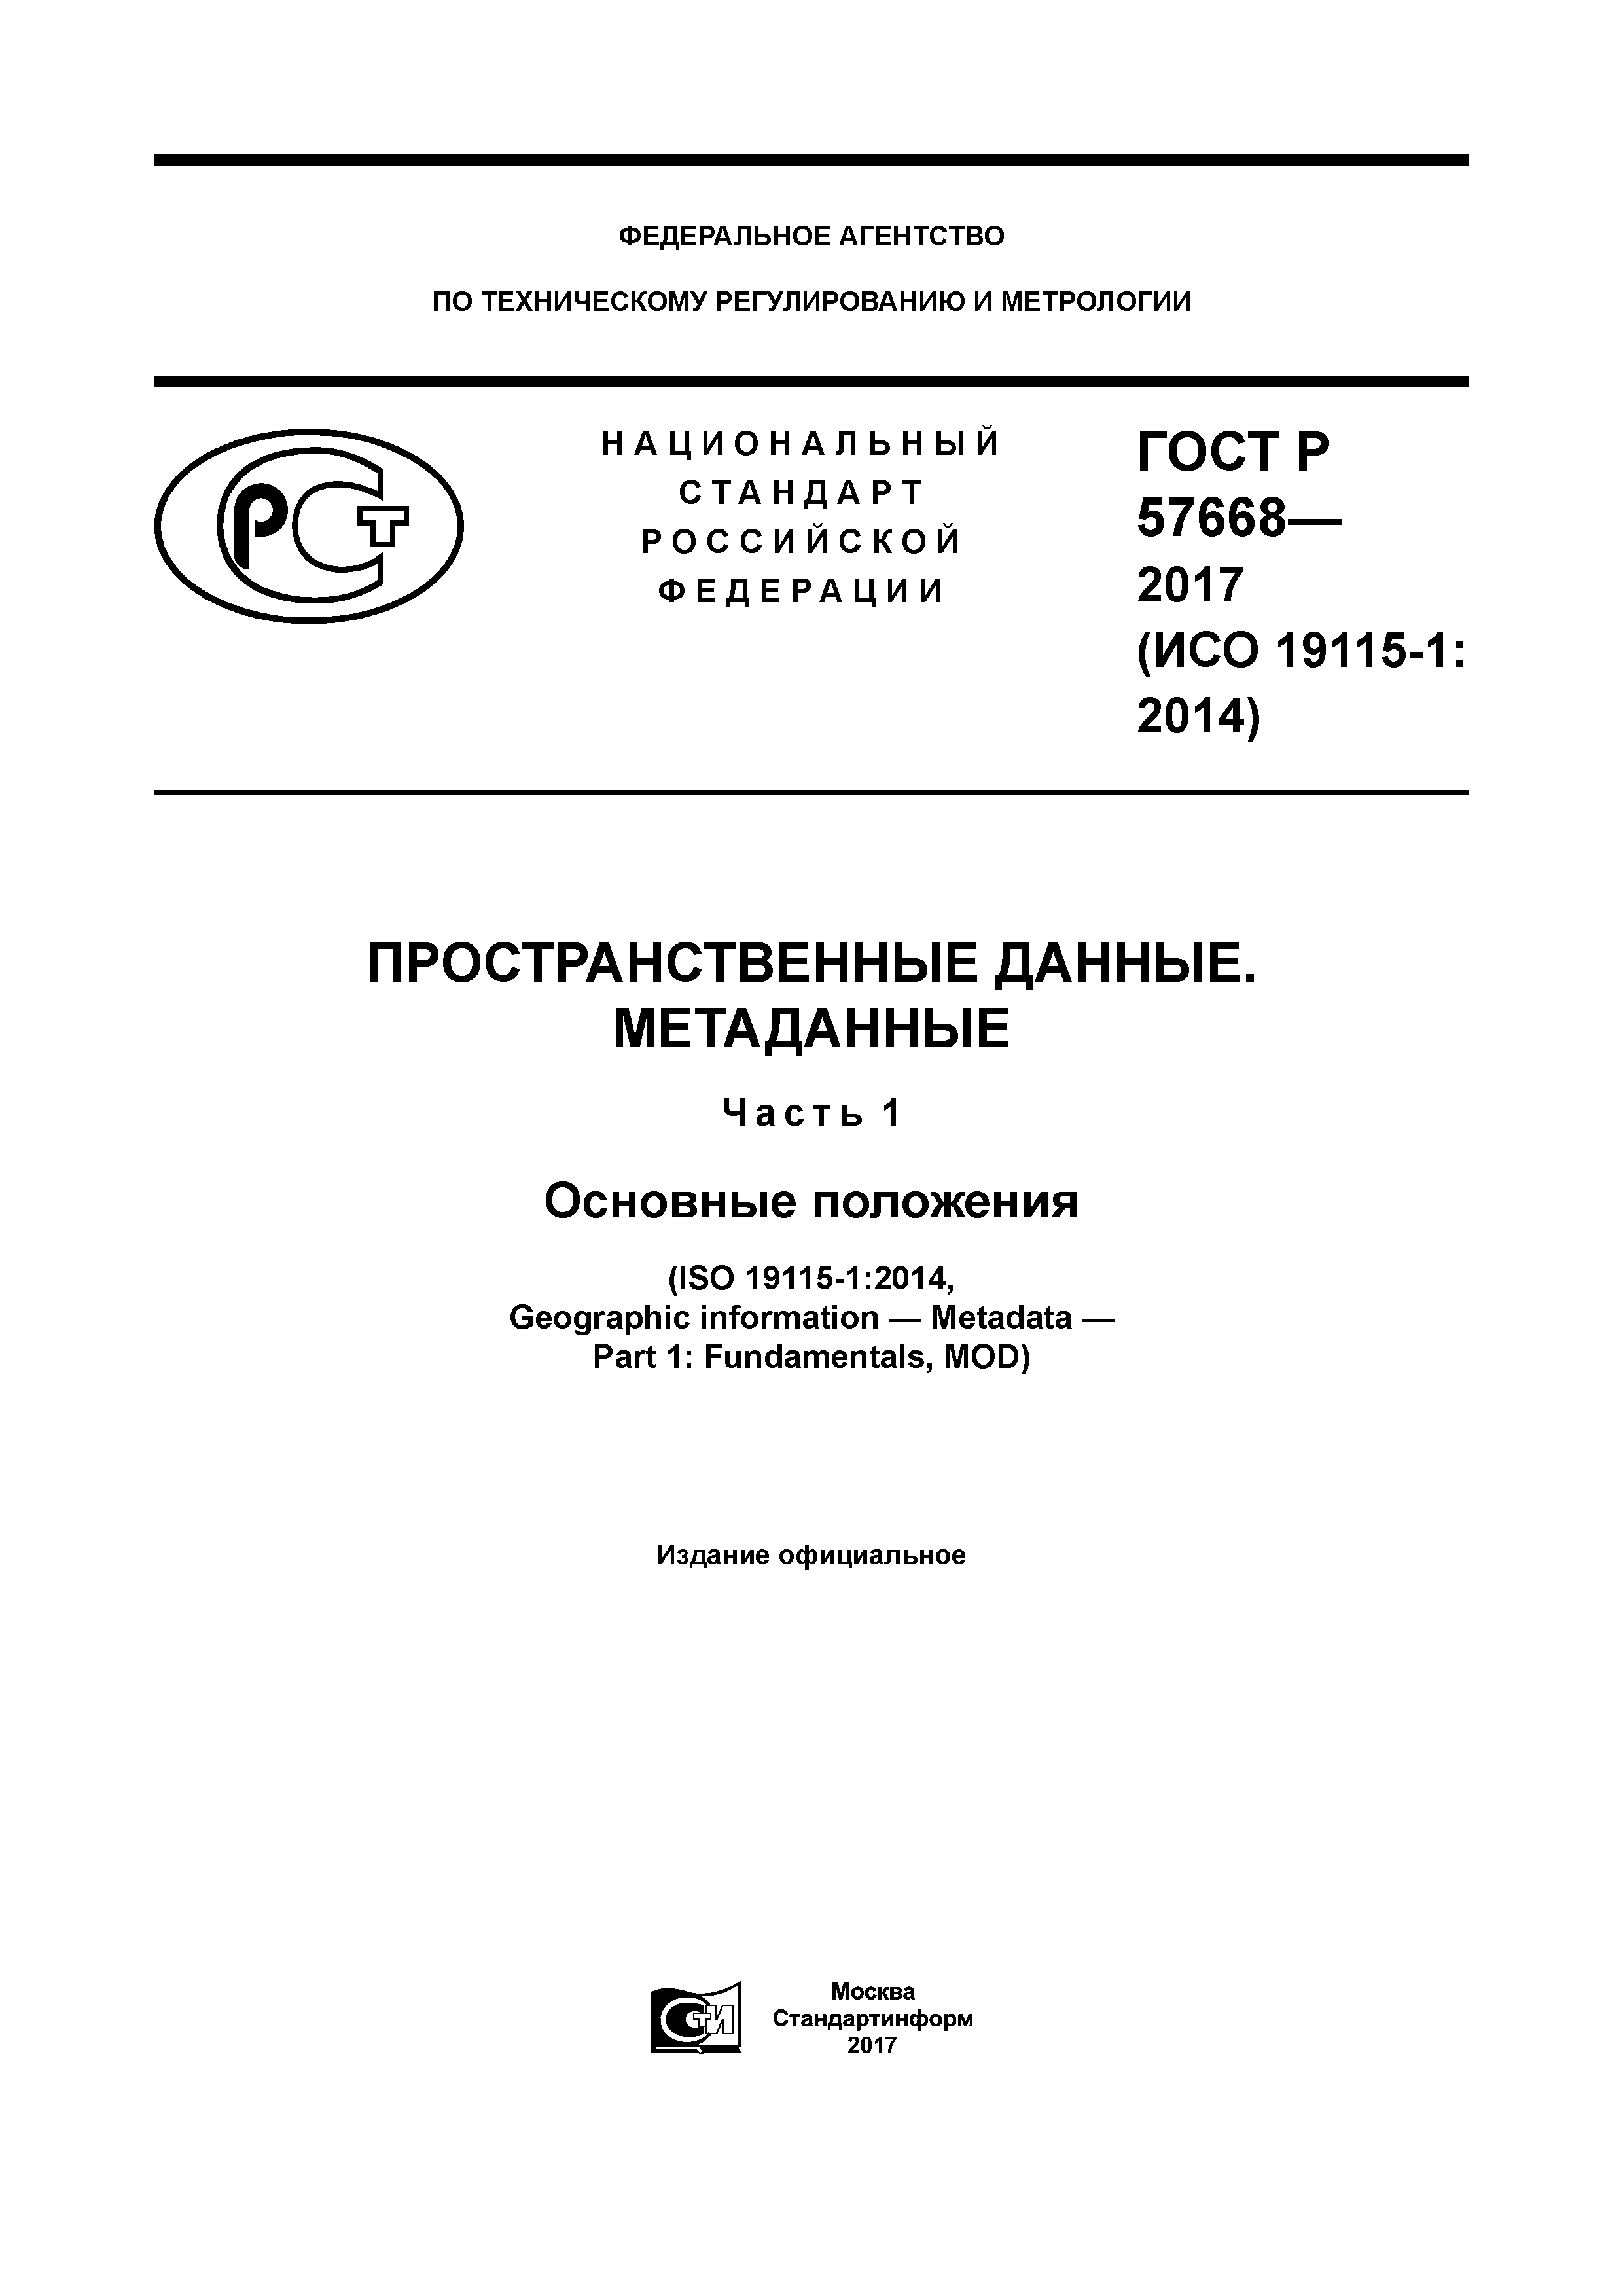 ГОСТ Р 57668-2017